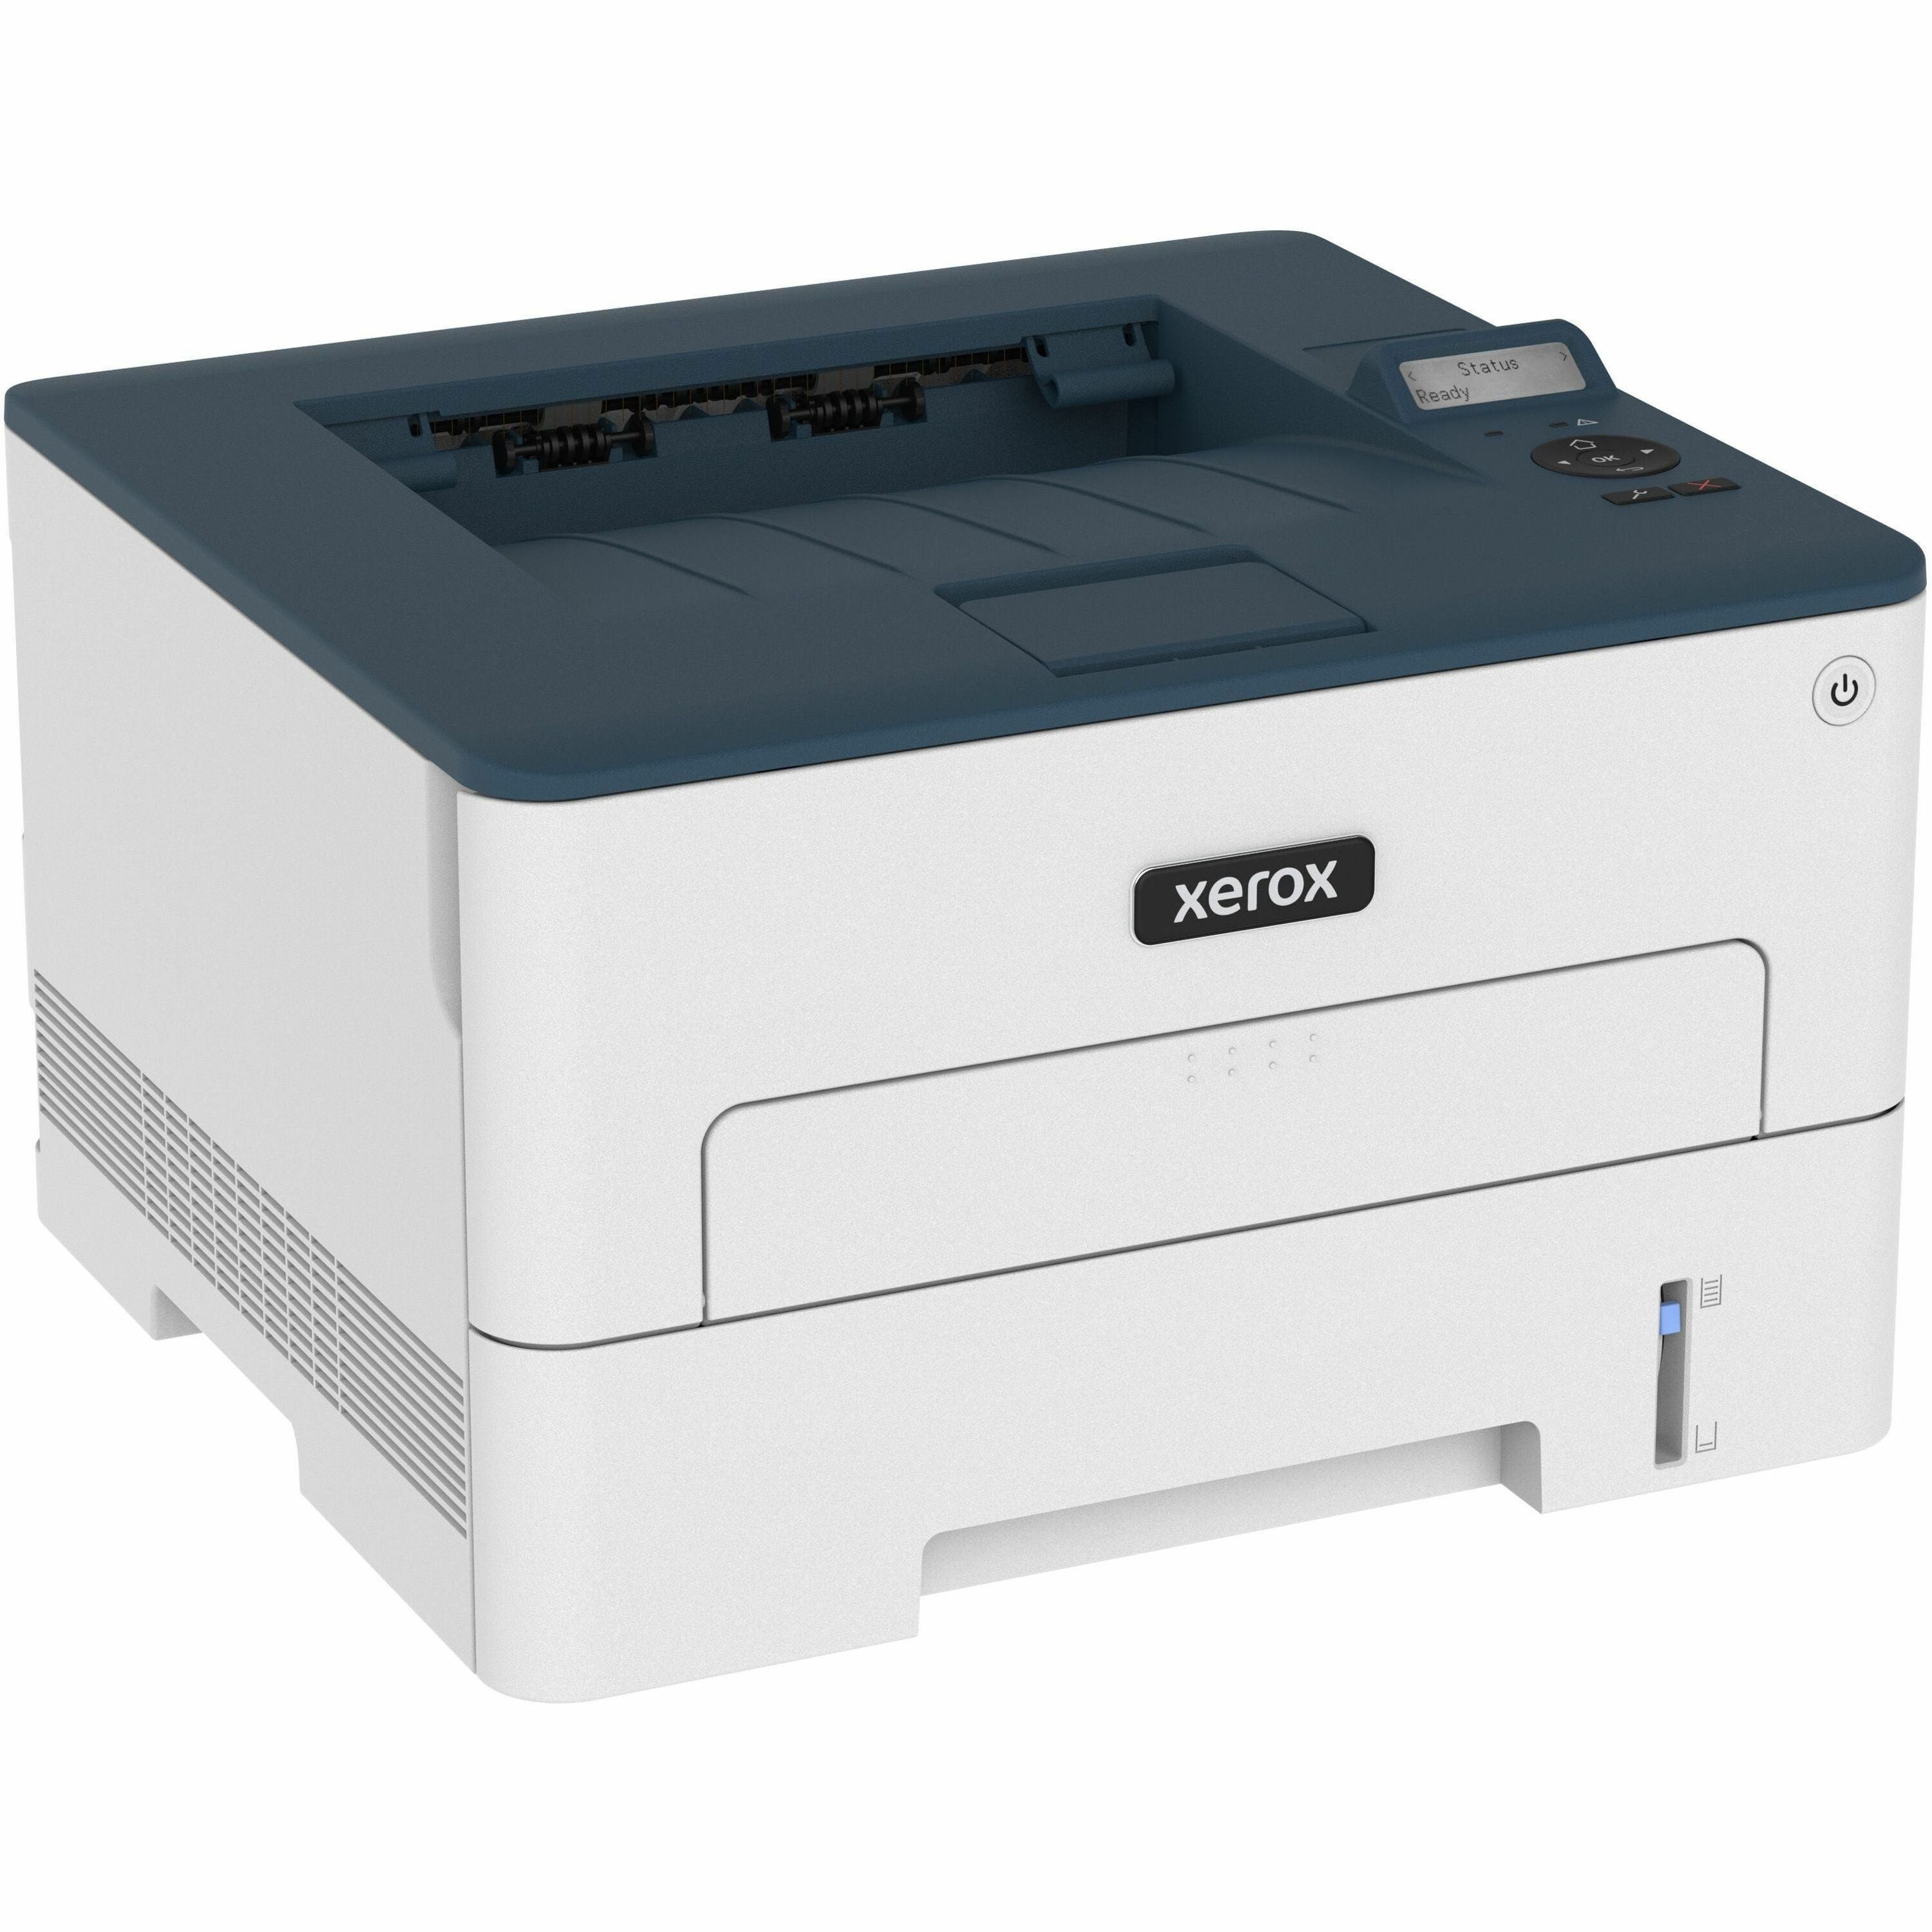 xerox-b230-dni-desktop-wireless-laser-printer-monochrome-36-ppm-mono-600-x-600-dpi-print-automatic-duplex-print-251-sheets-input-ethernet-wireless-lan-apple-airprint-mopria-print-service-chromebook-30000-pages-duty-cycle-plain-p_xerb230dni - 1